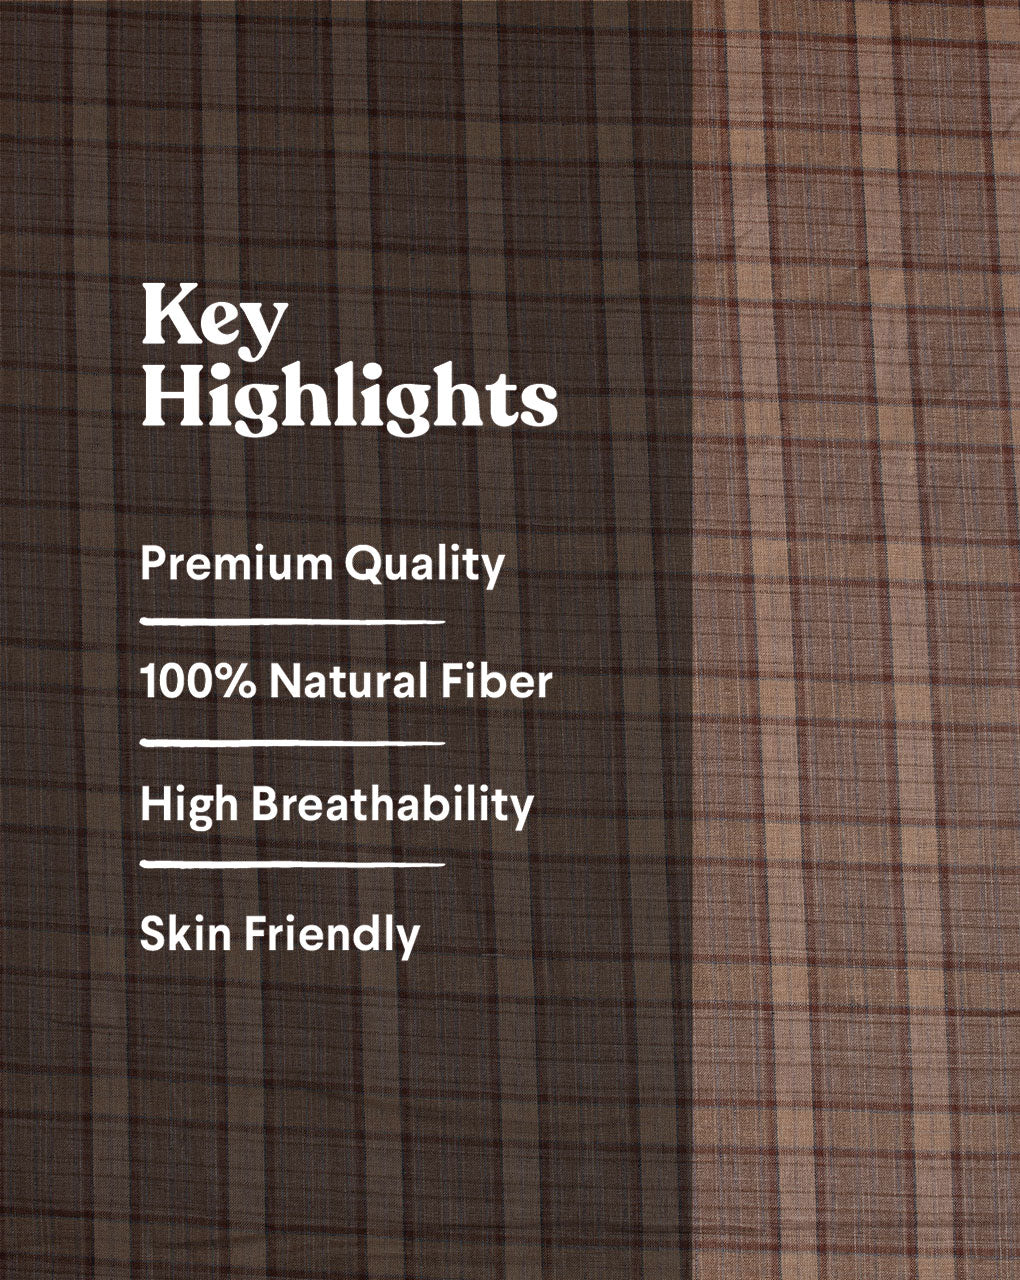 Yarn Dyed Linen European Flax Certified Fabric ( Width 58 Inch ) - Fabriclore.com